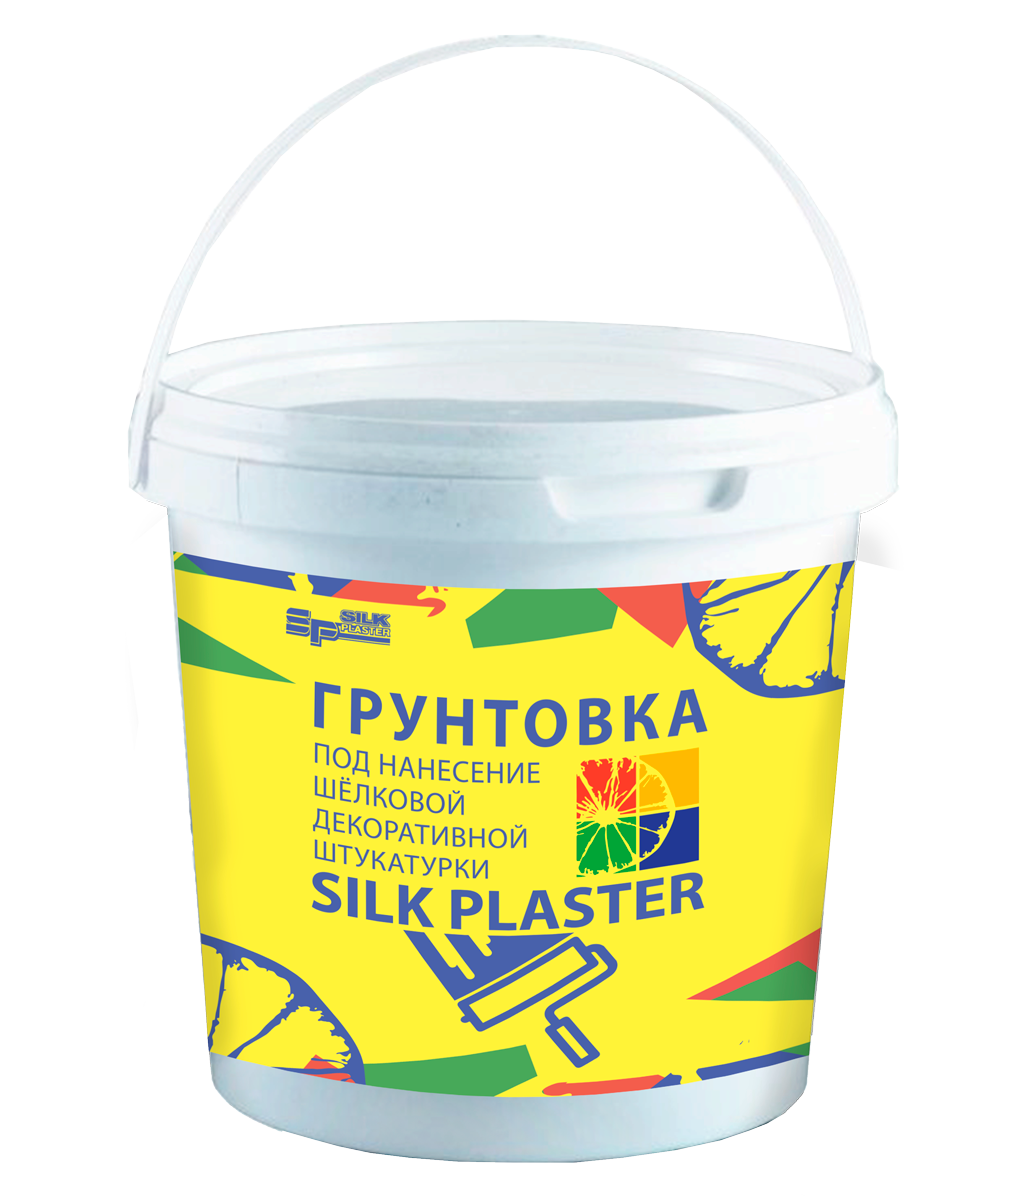     Silk Plaster (0,8/1),  